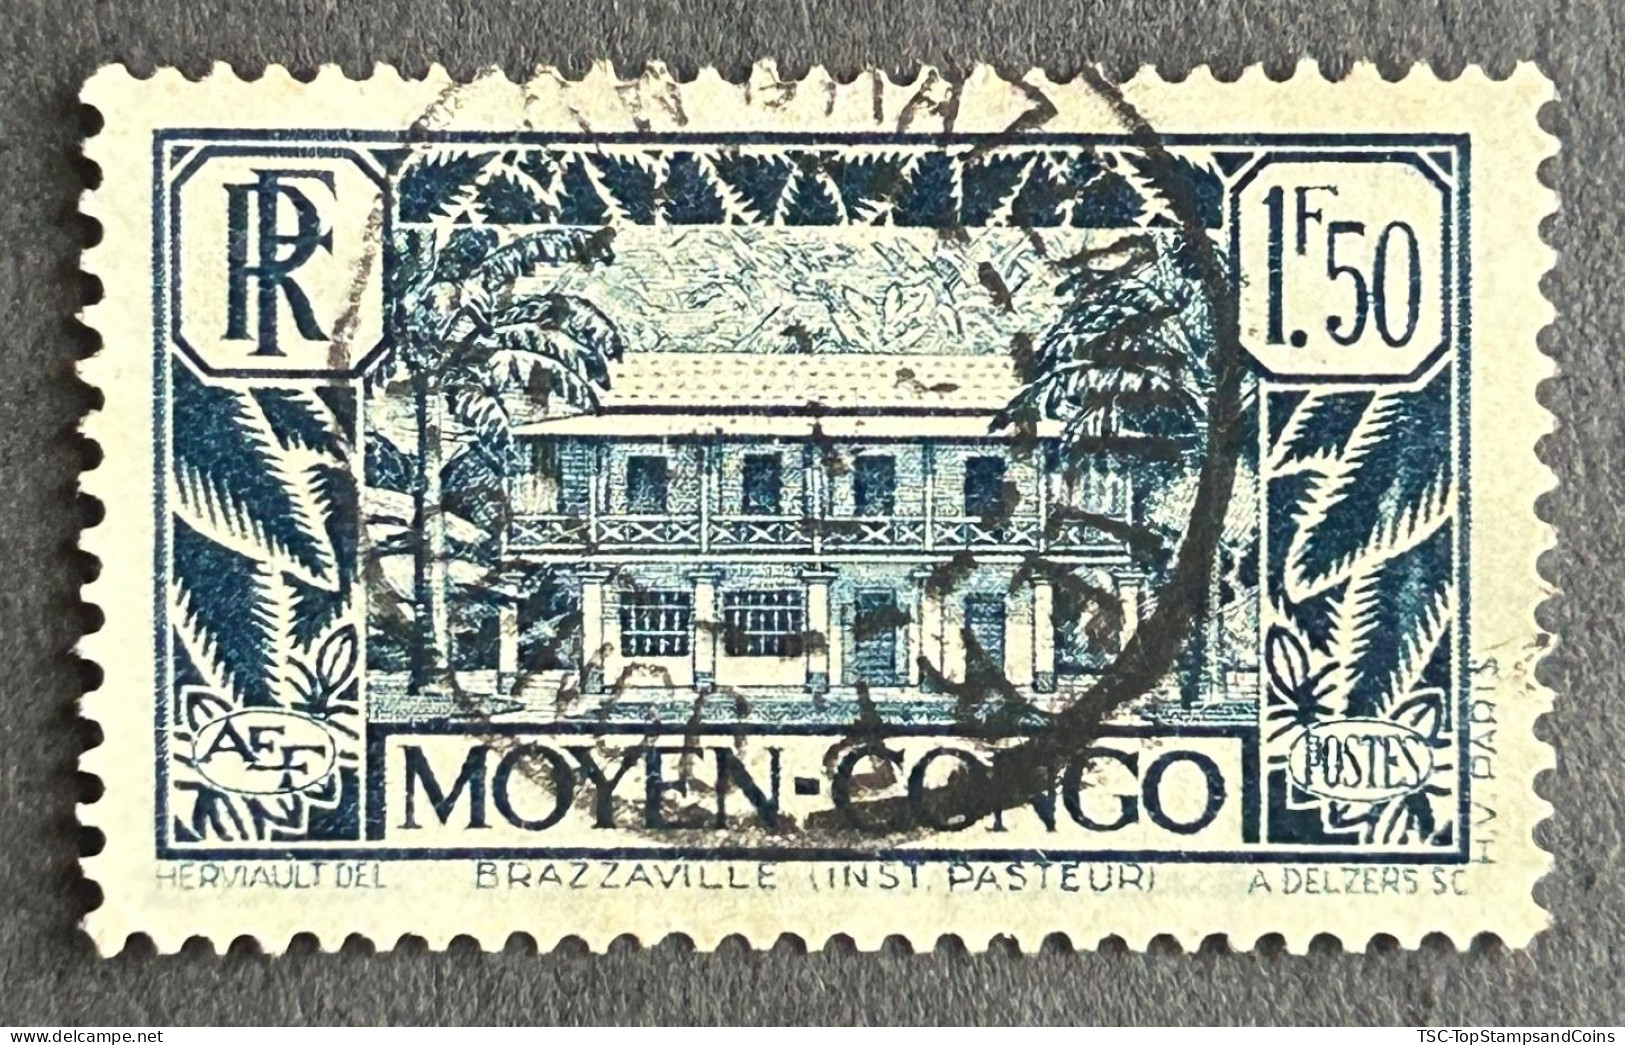 FRCG129U2 - Brazzaville - Pasteur Institute - 1.50 F Used Stamp - Middle Congo - 1933 - Oblitérés